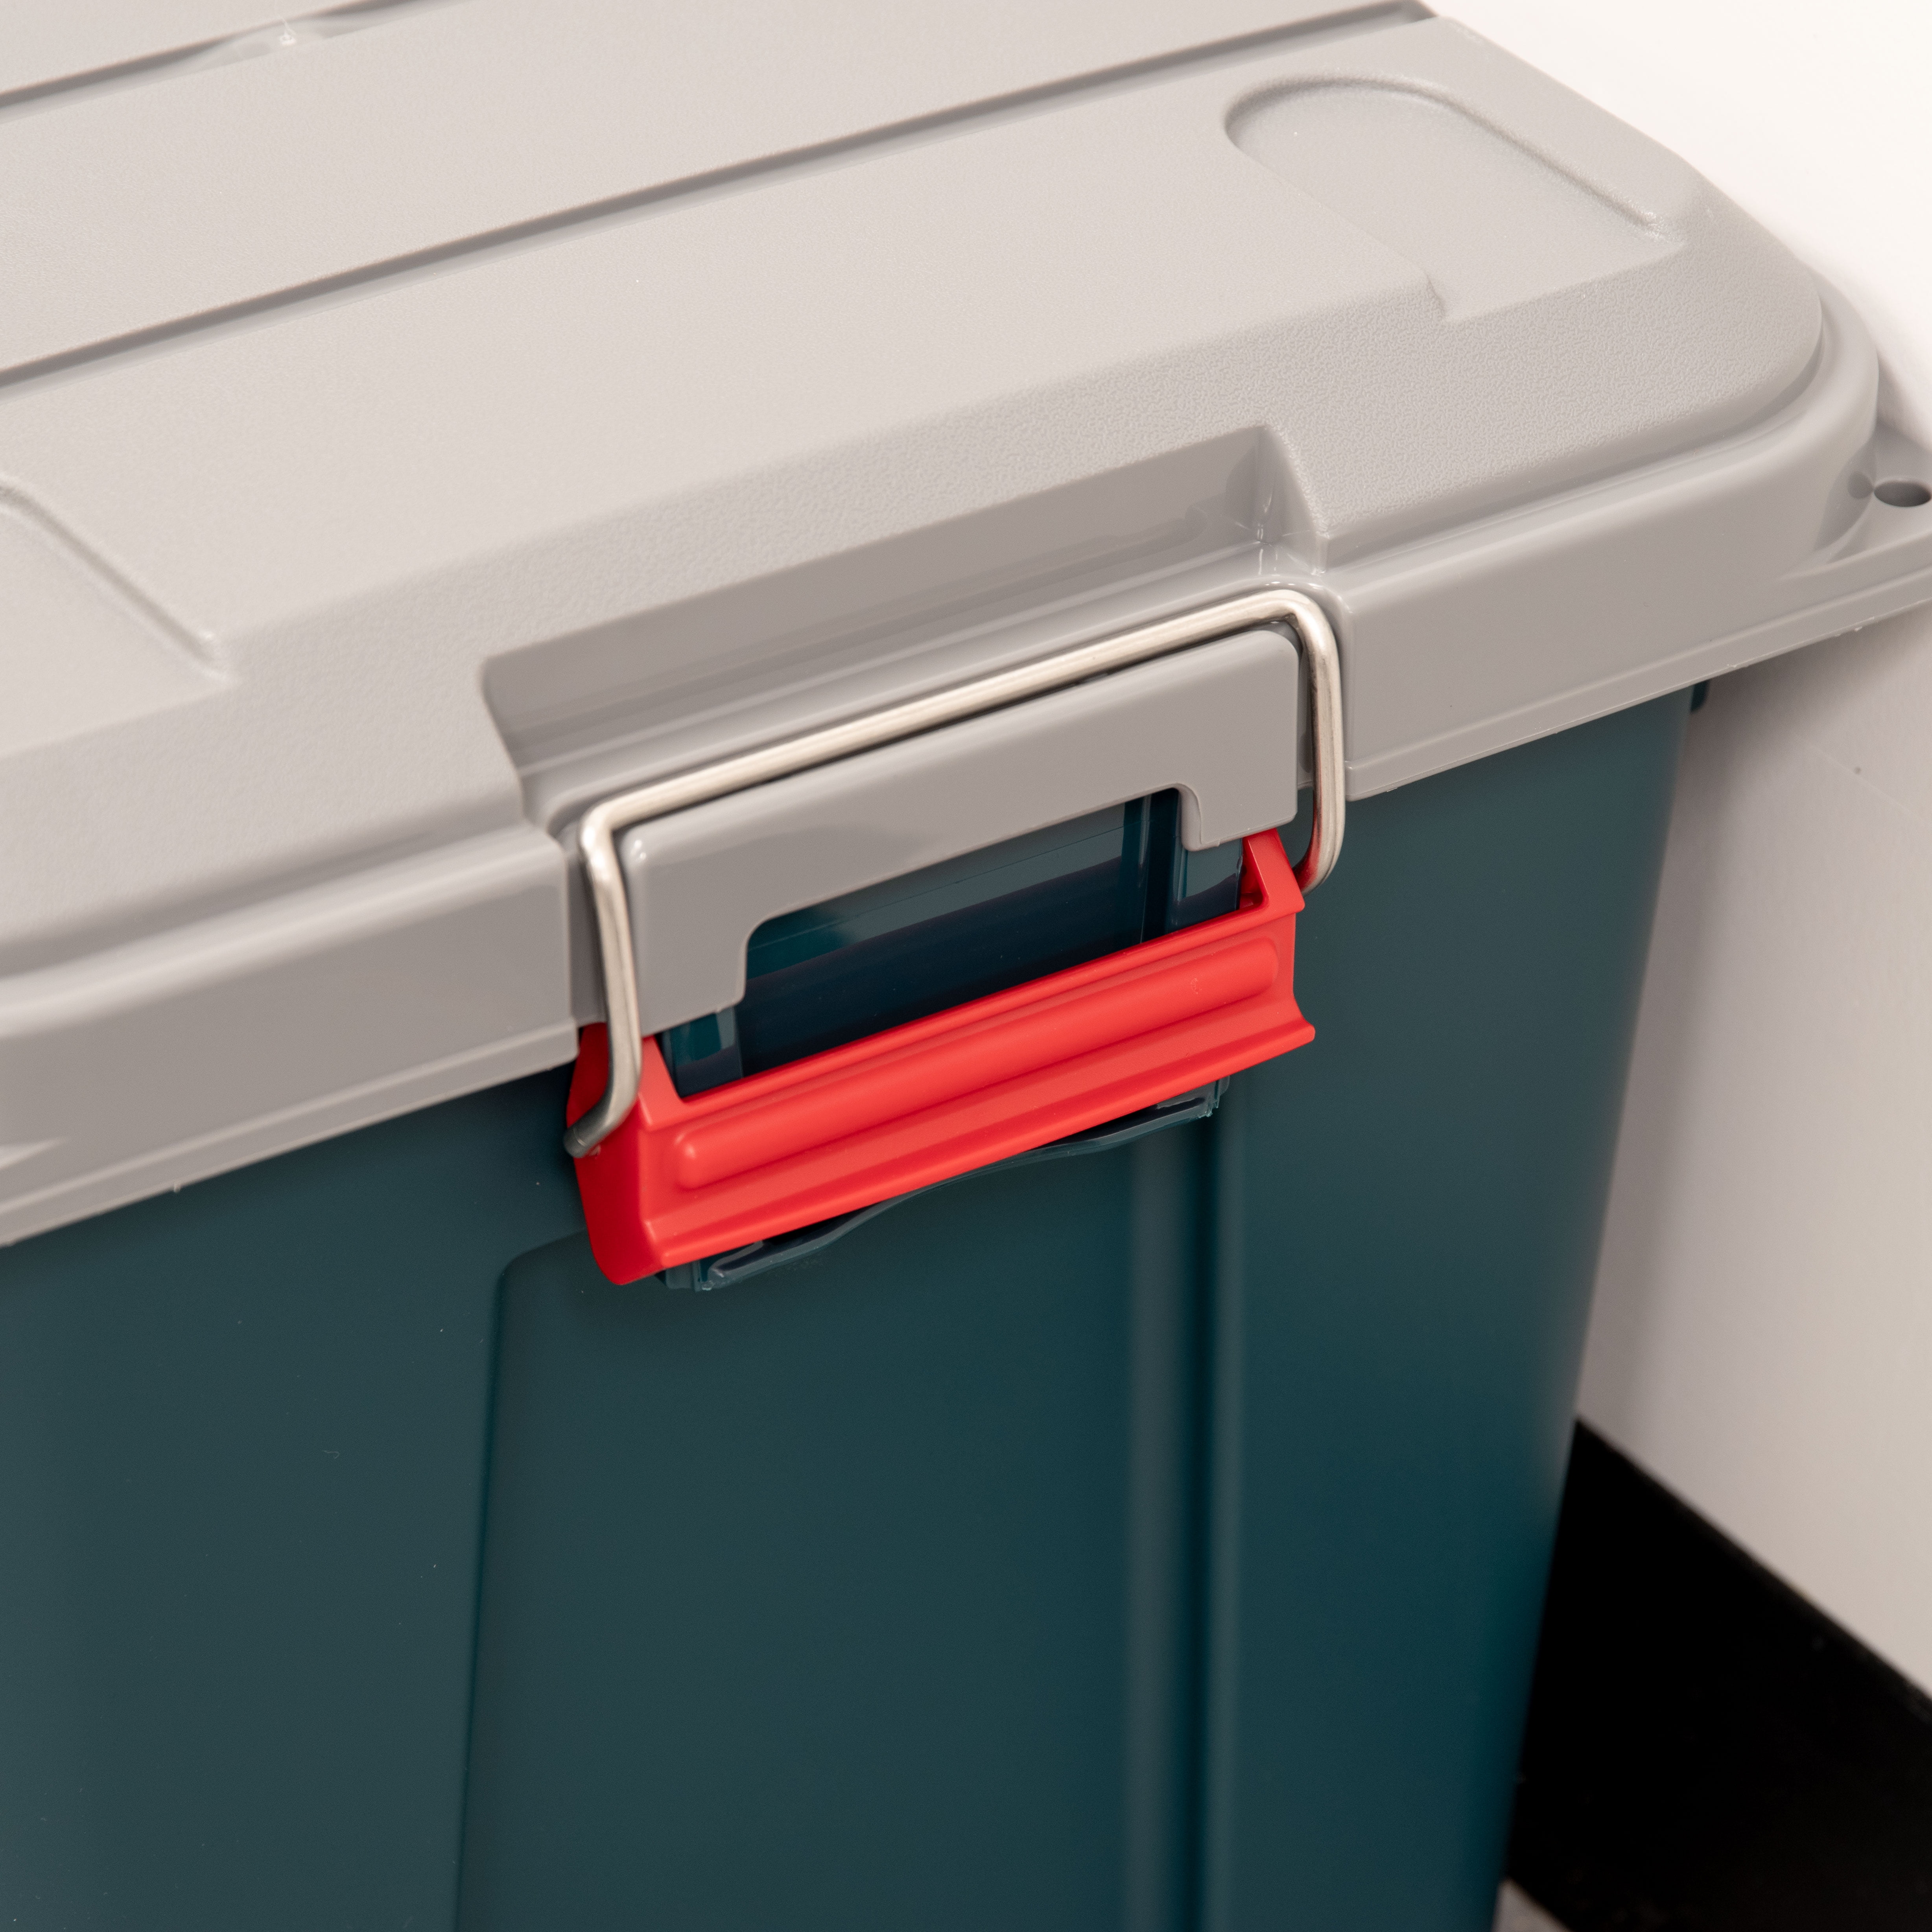 IRIS USA 4Pack 82qt/20gal WeatherPro™ Storage Utility Tote Container Box,  Green 